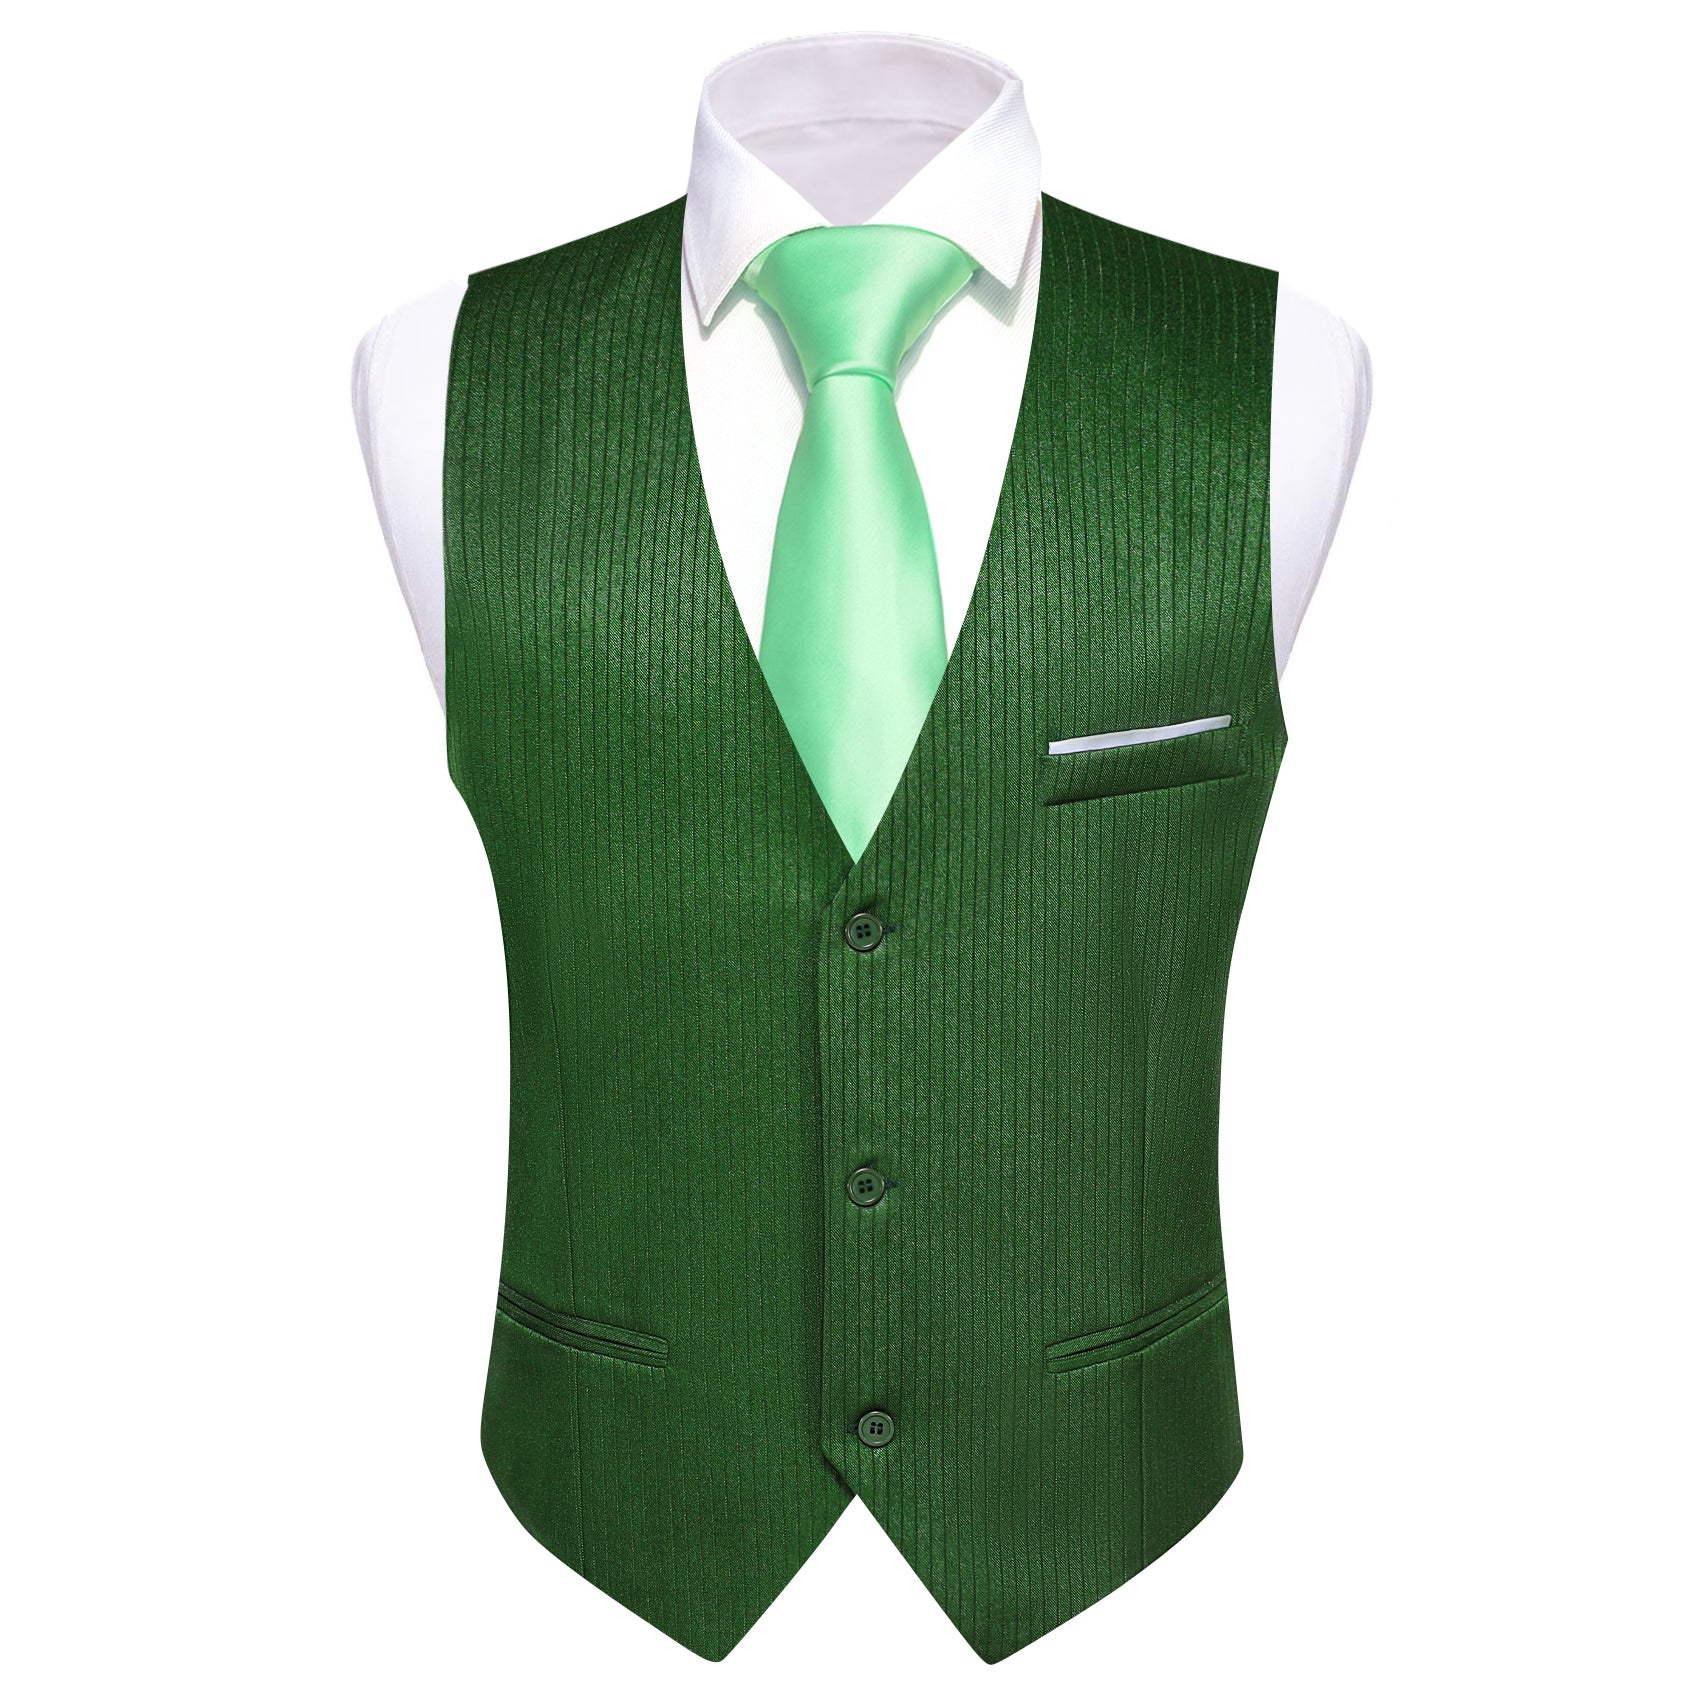 Barry.wang Men's Vest Grass Green Solid Business Suit Waistcoat Vest